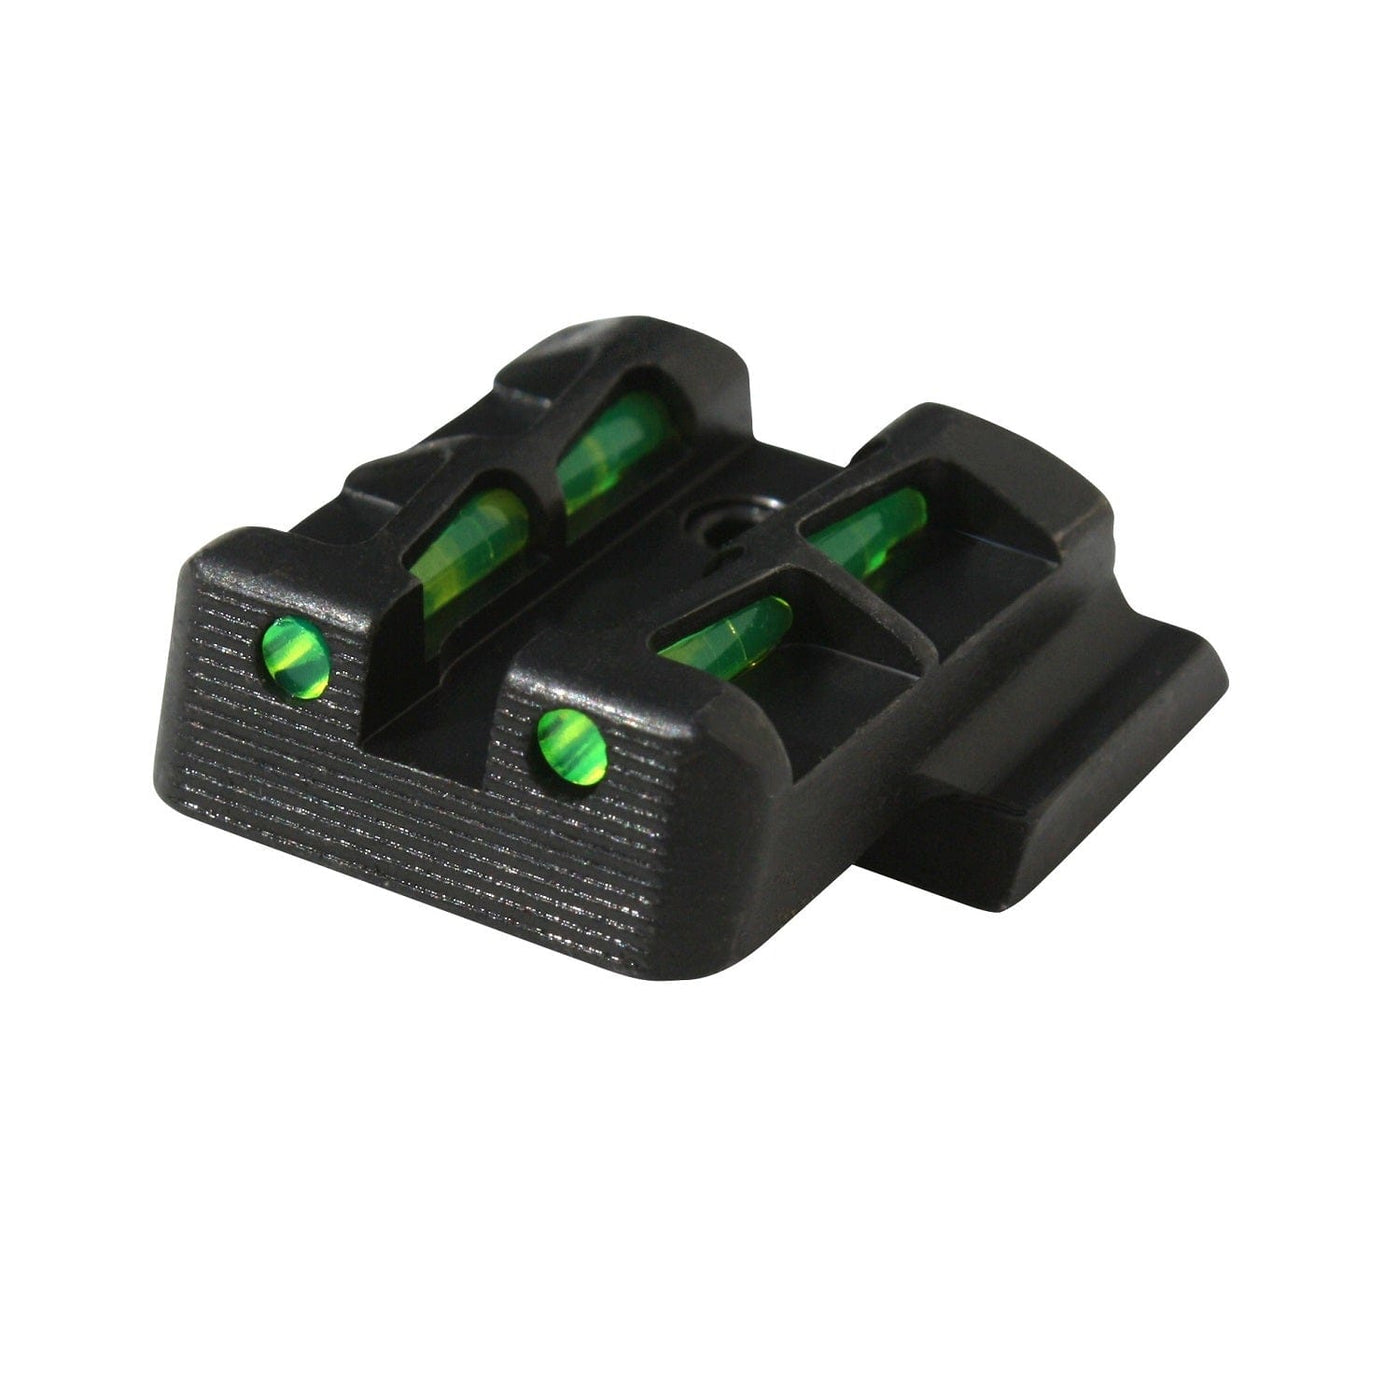 HiViz Hi-Viz Glock Rear Sight for 9mm - 40 and 357 Sig Optics And Sights